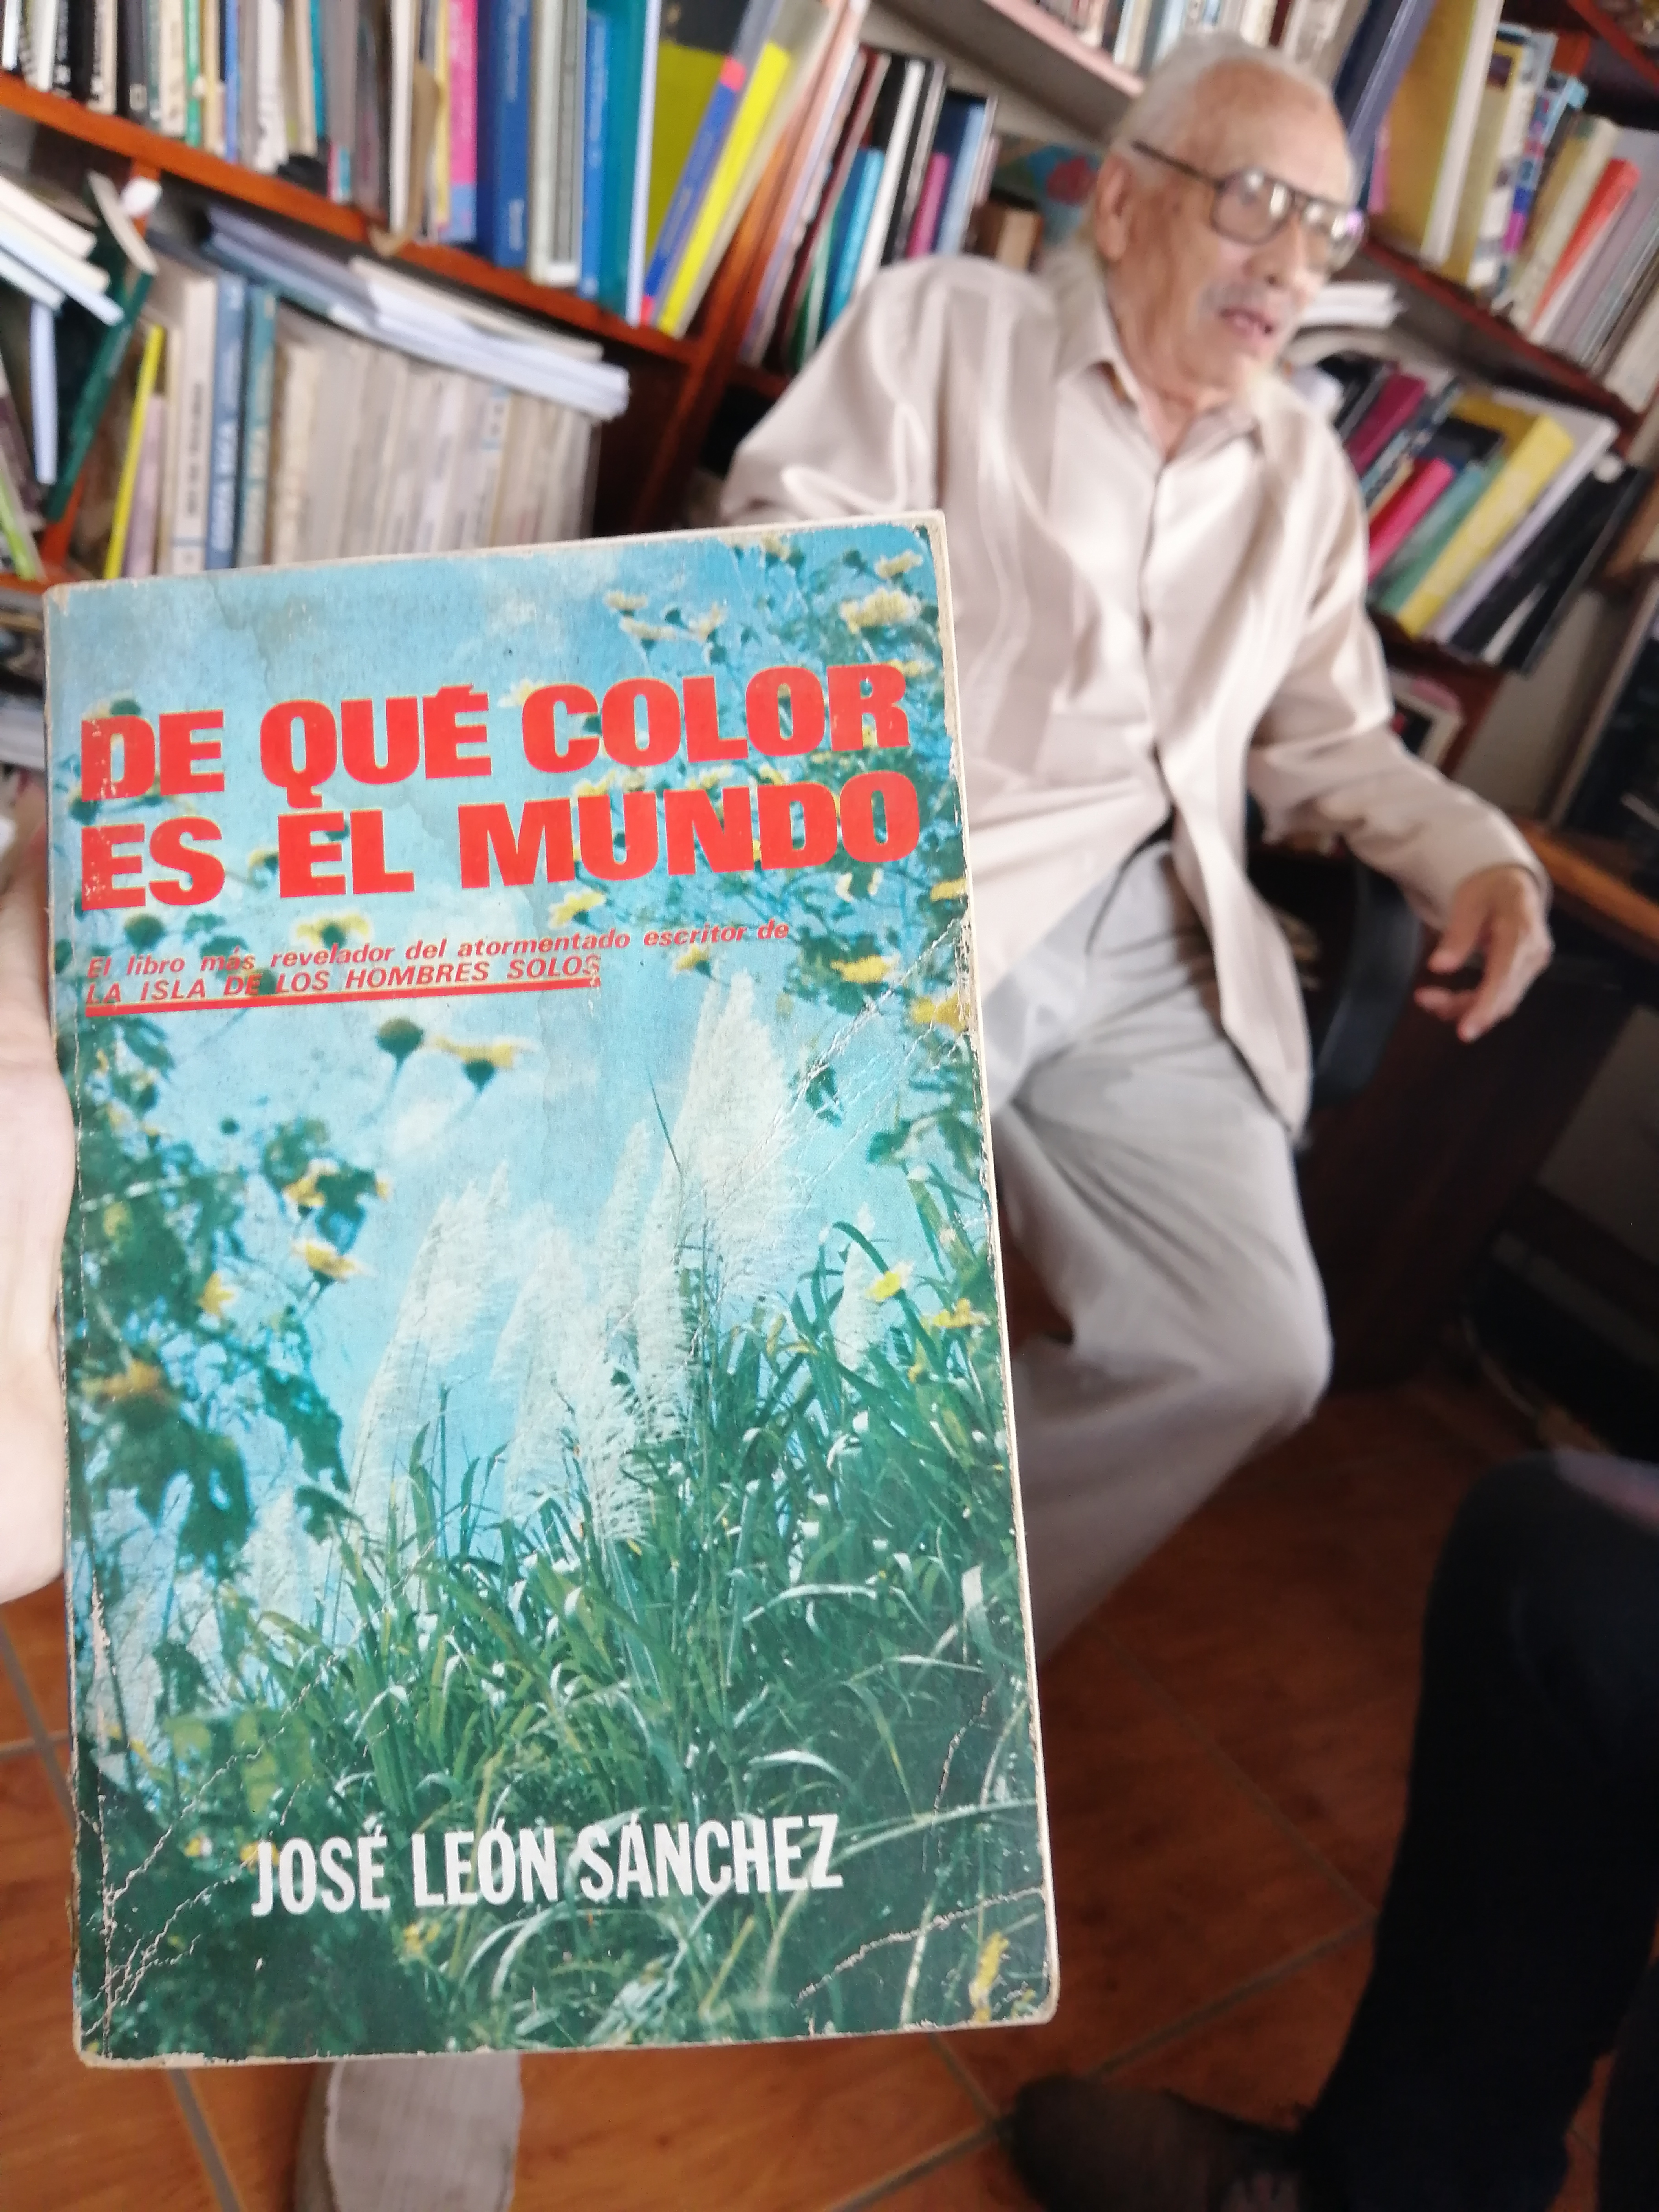 UN MUNDO FELIZ - Librería León